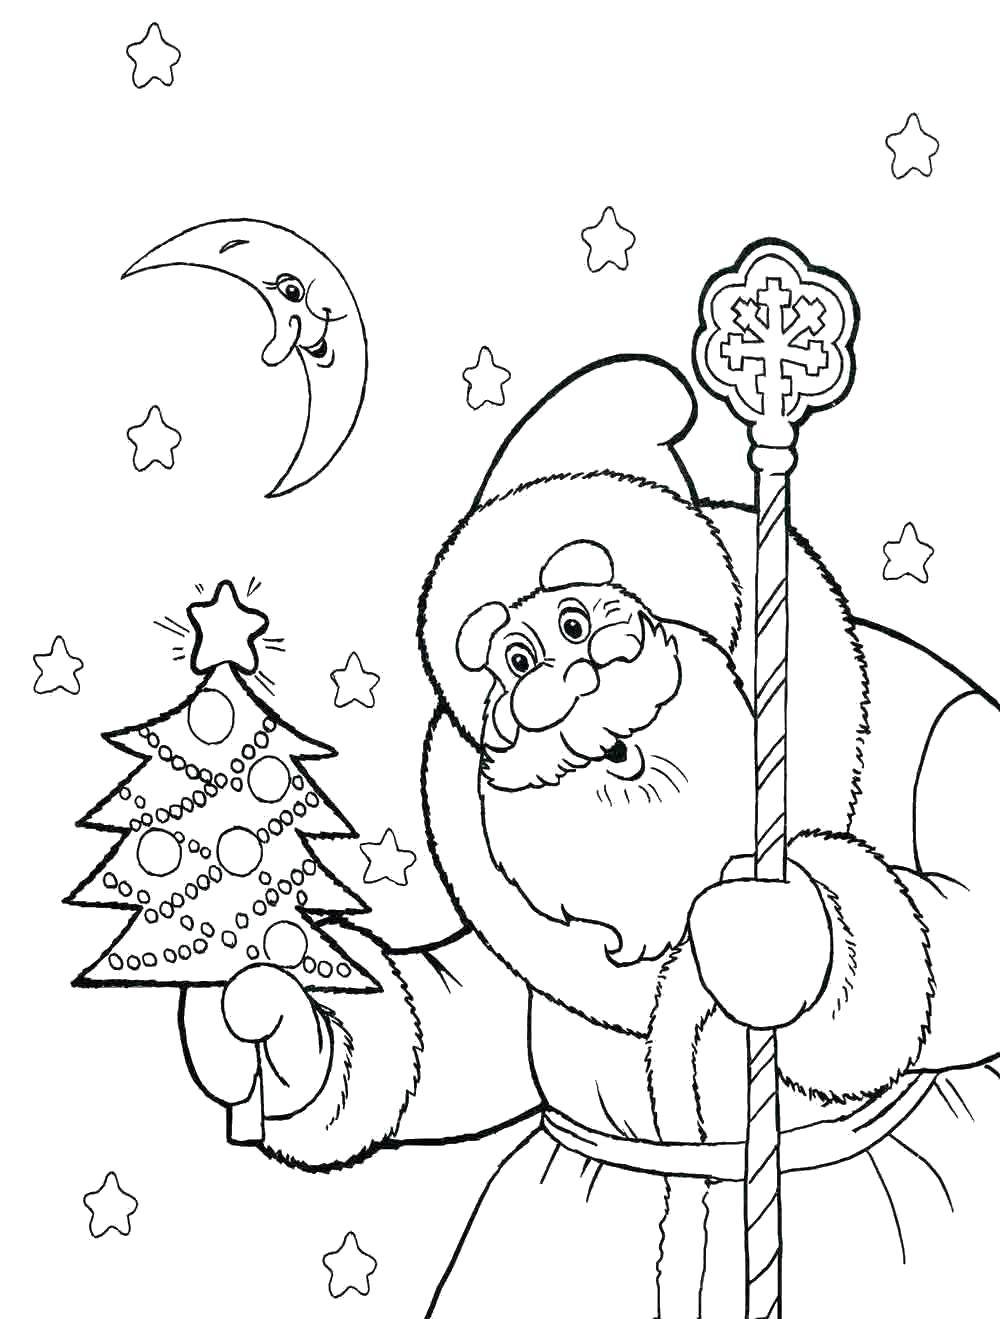 Coloring Santa Claus with Christmas tree. Category new year. Tags:  New Year, Santa Claus.